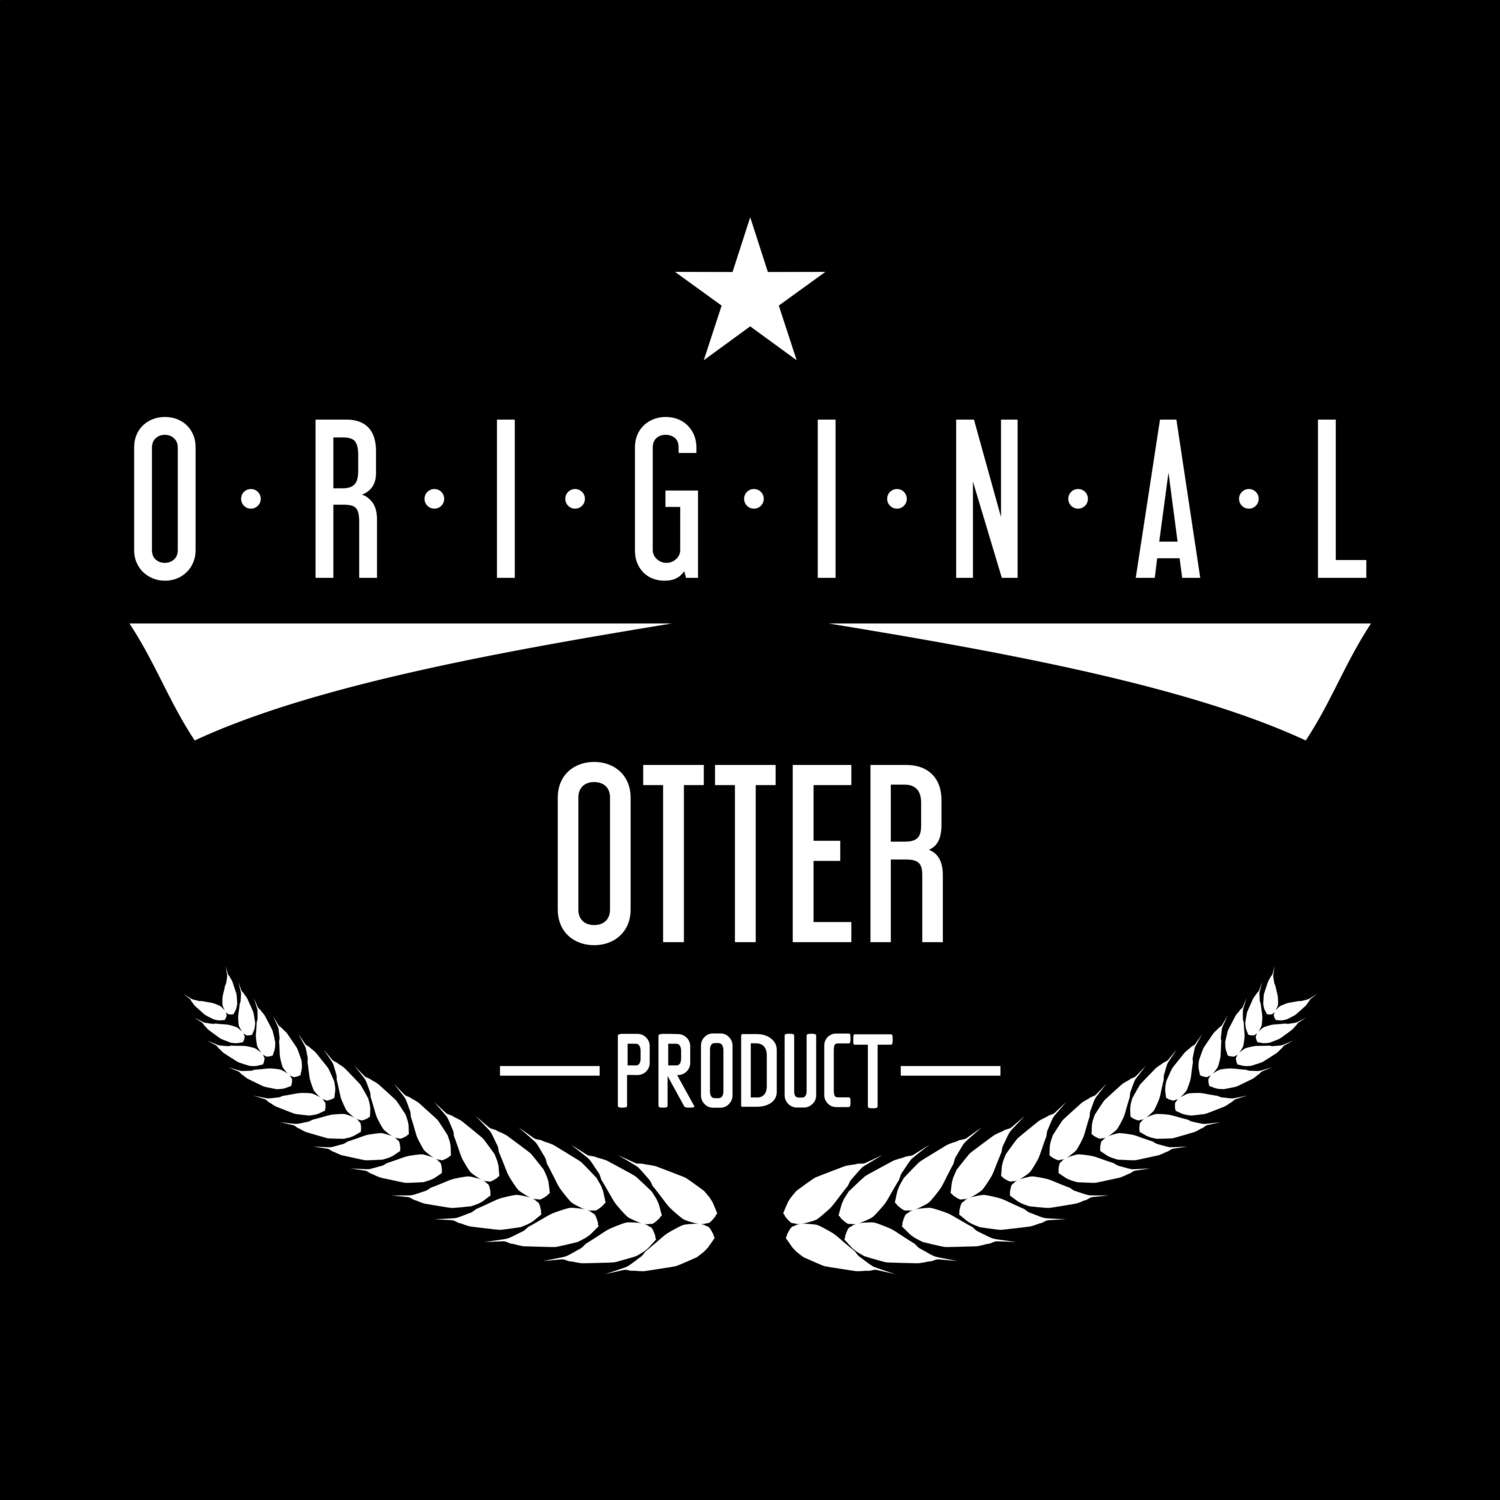 Otter T-Shirt »Original Product«